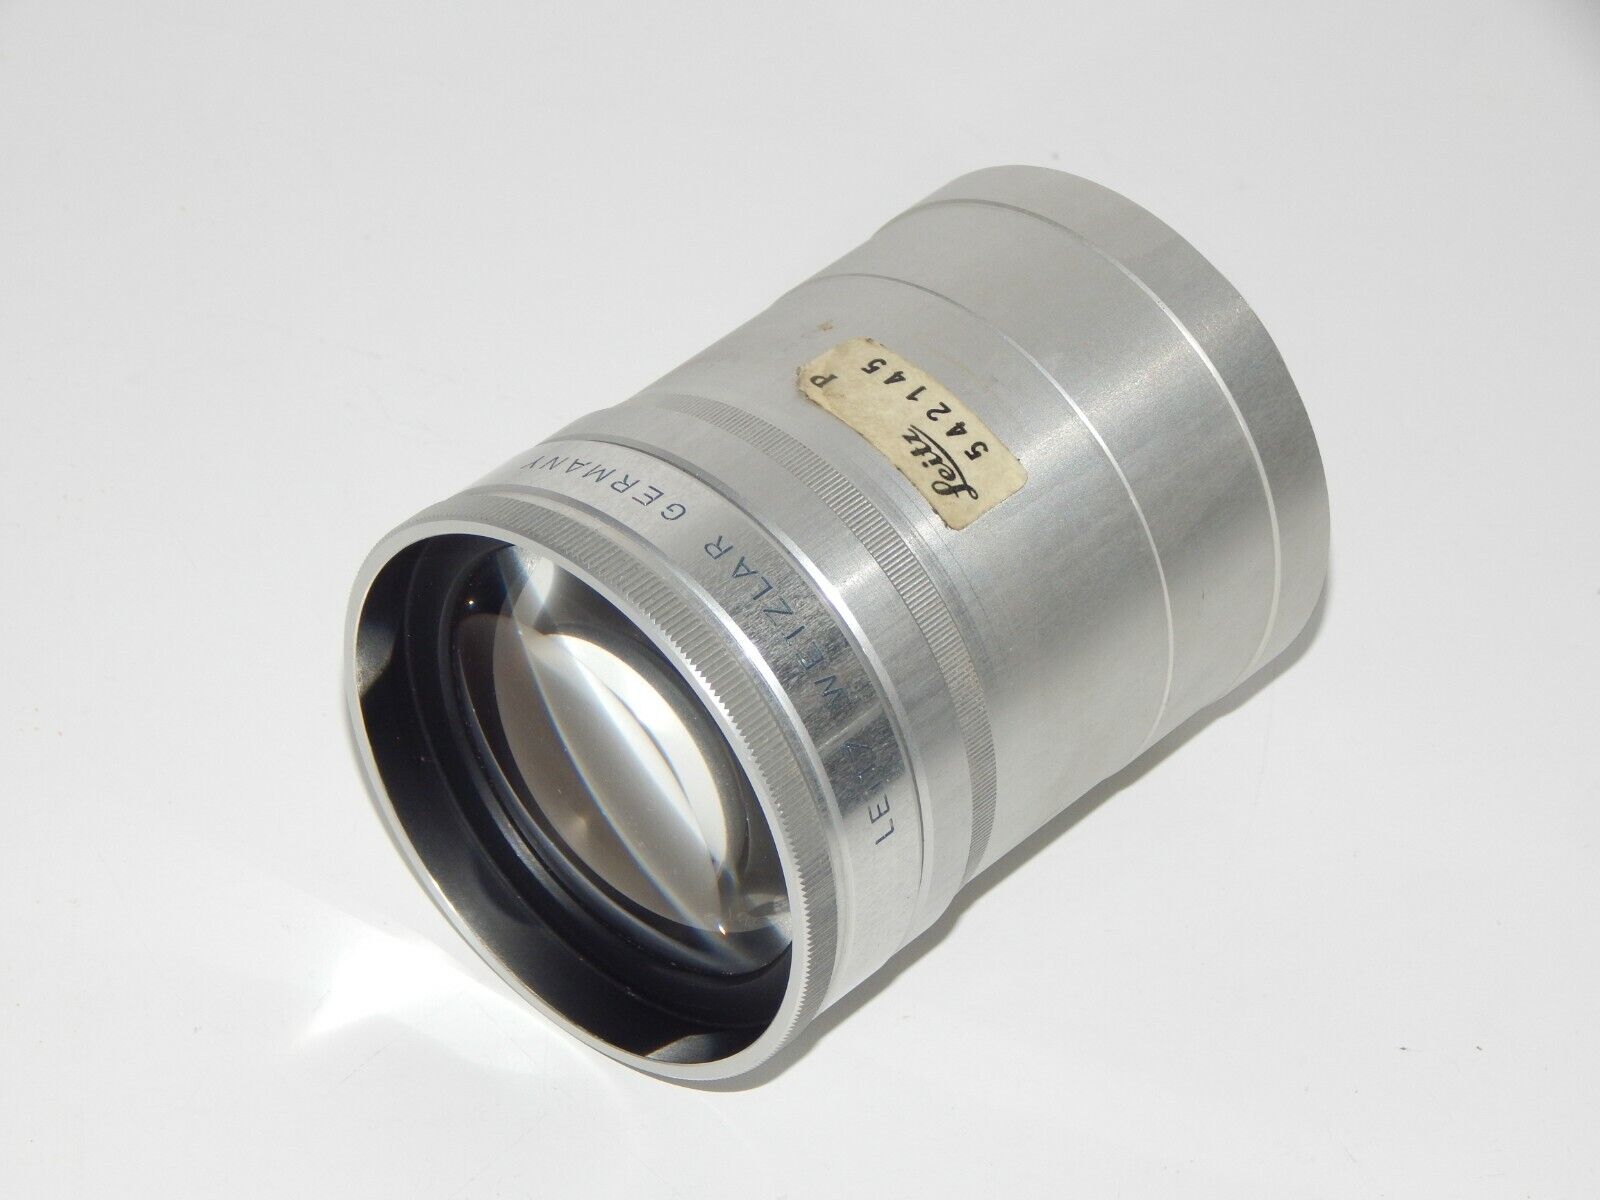 used Lens LEITZ WETZLAR ELMARON 1:2.8/150 mm - Germany